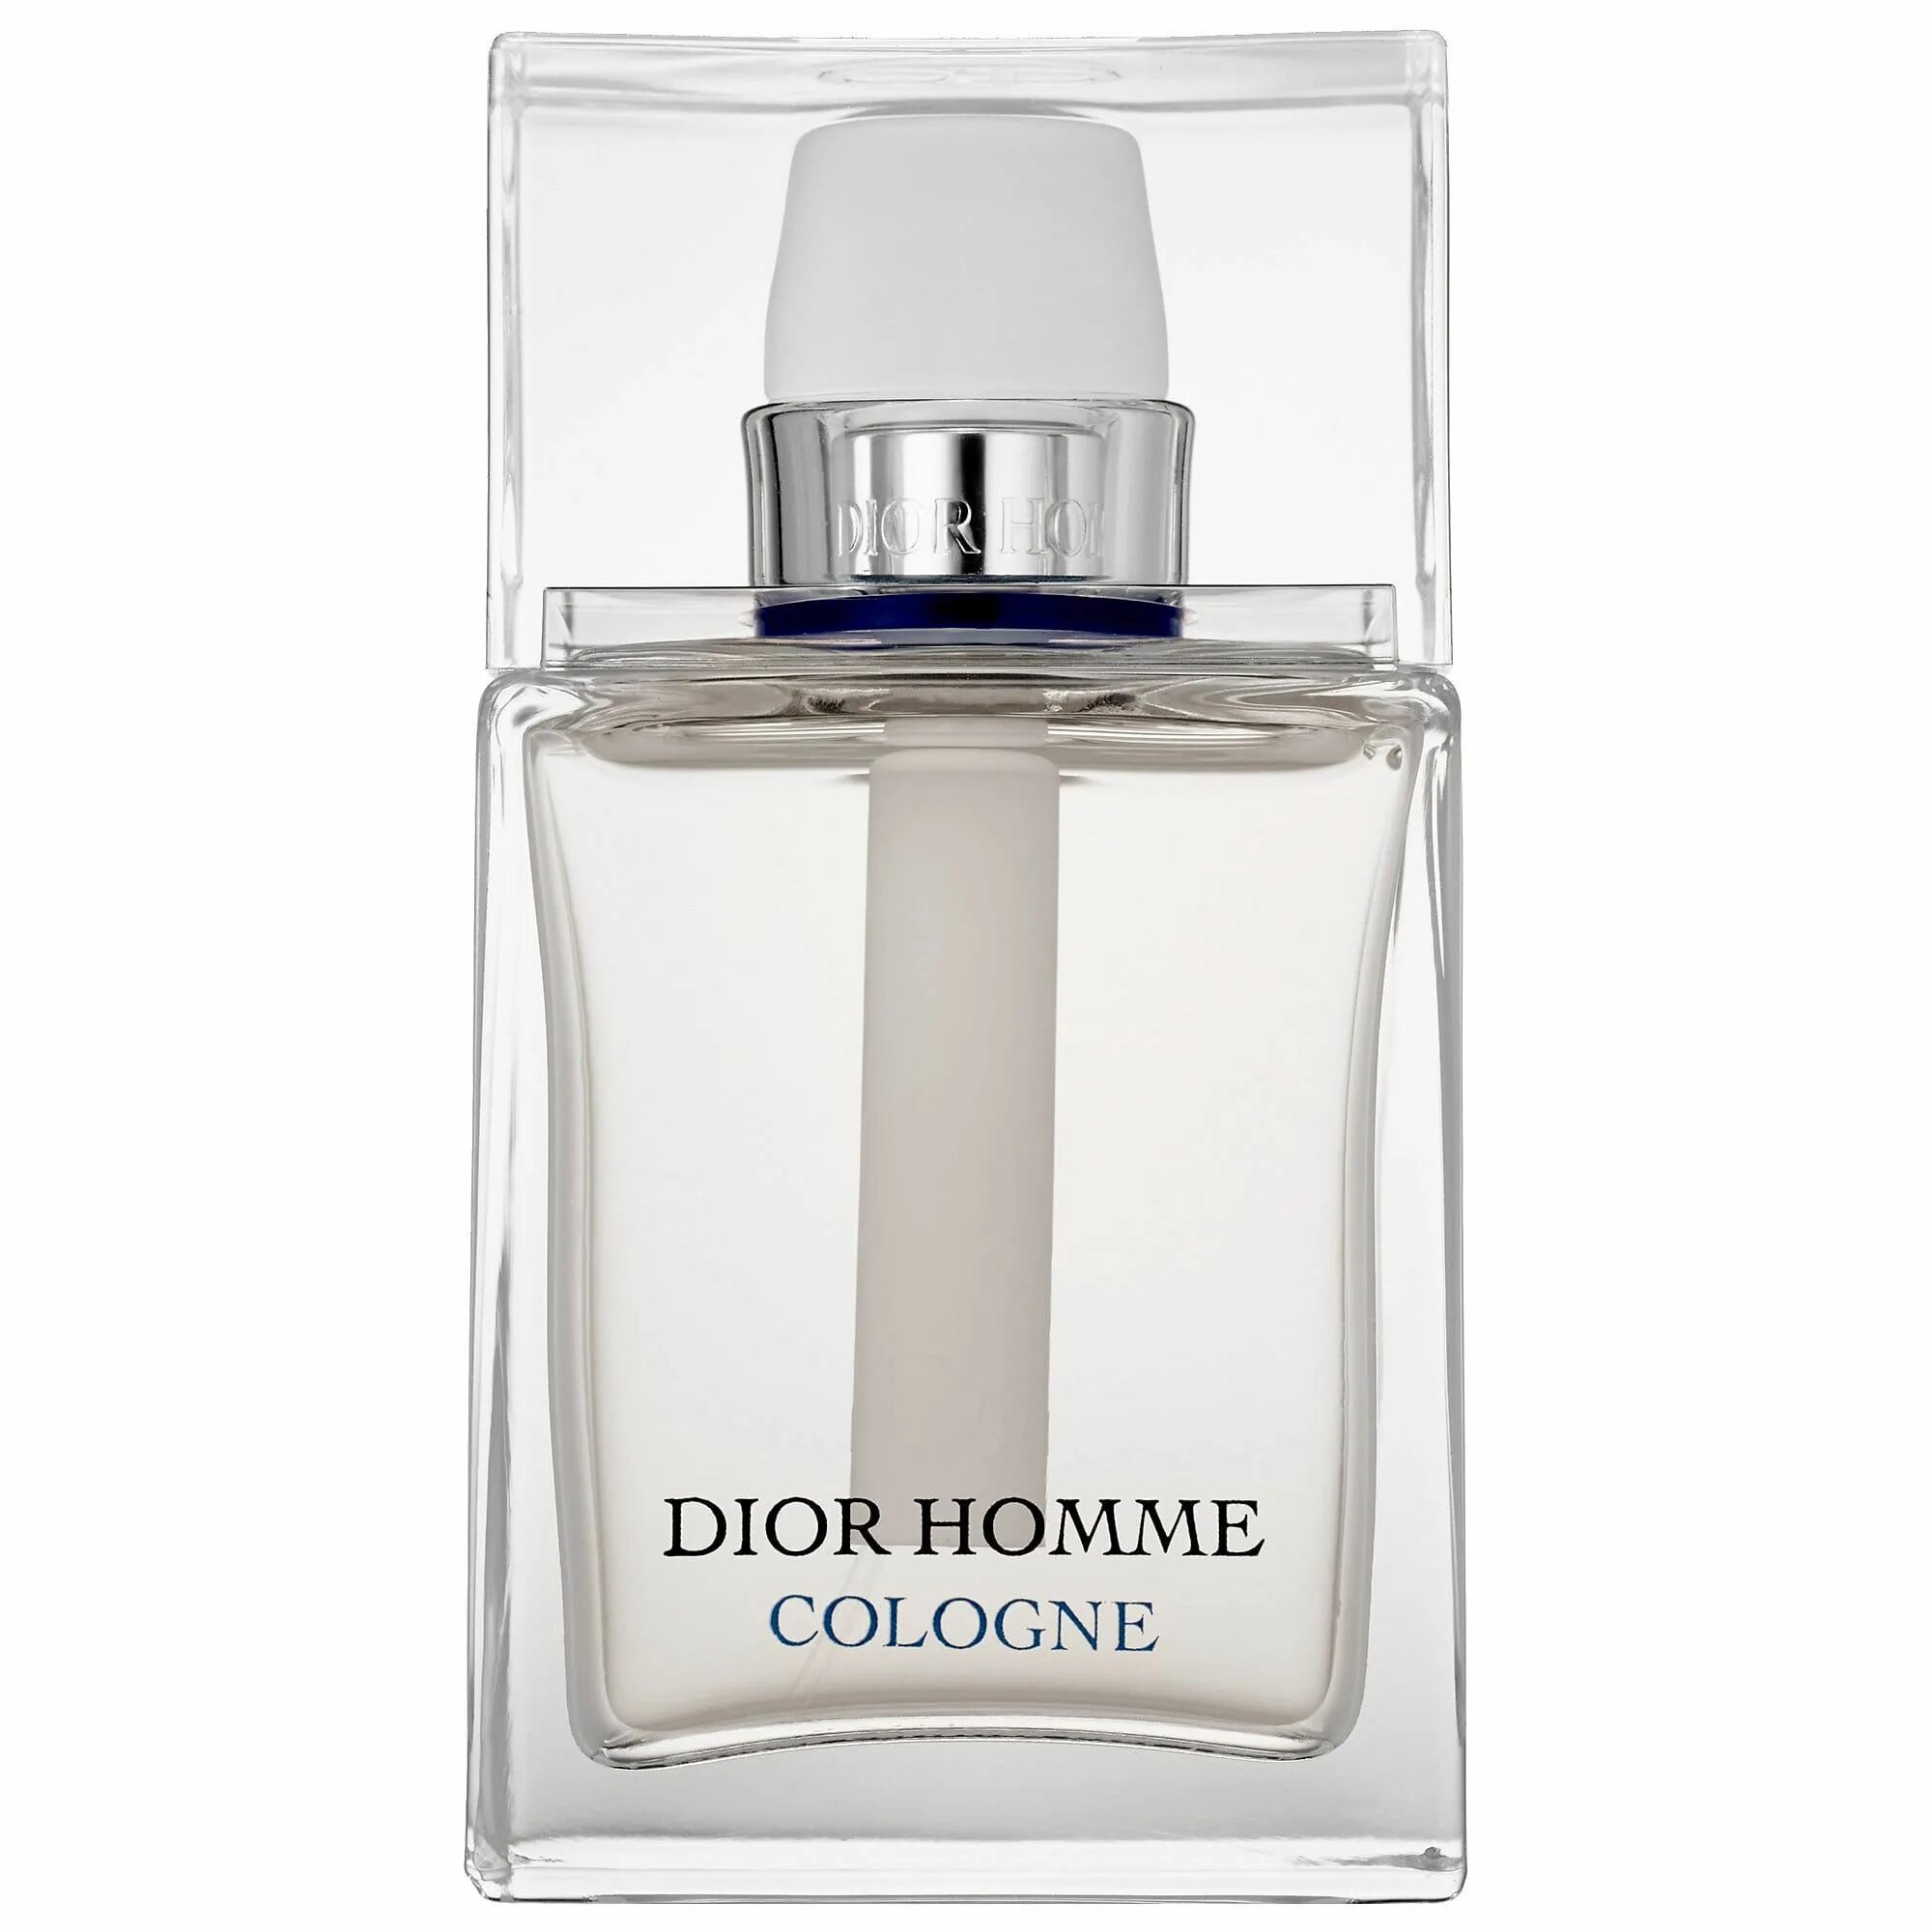 Homme cologne купить. Christian Dior Dior homme Cologne. Туалетная вода Dior homme Cologne. Dior homme Cologne 125ml. Dior одеколон Dior homme Cologne.